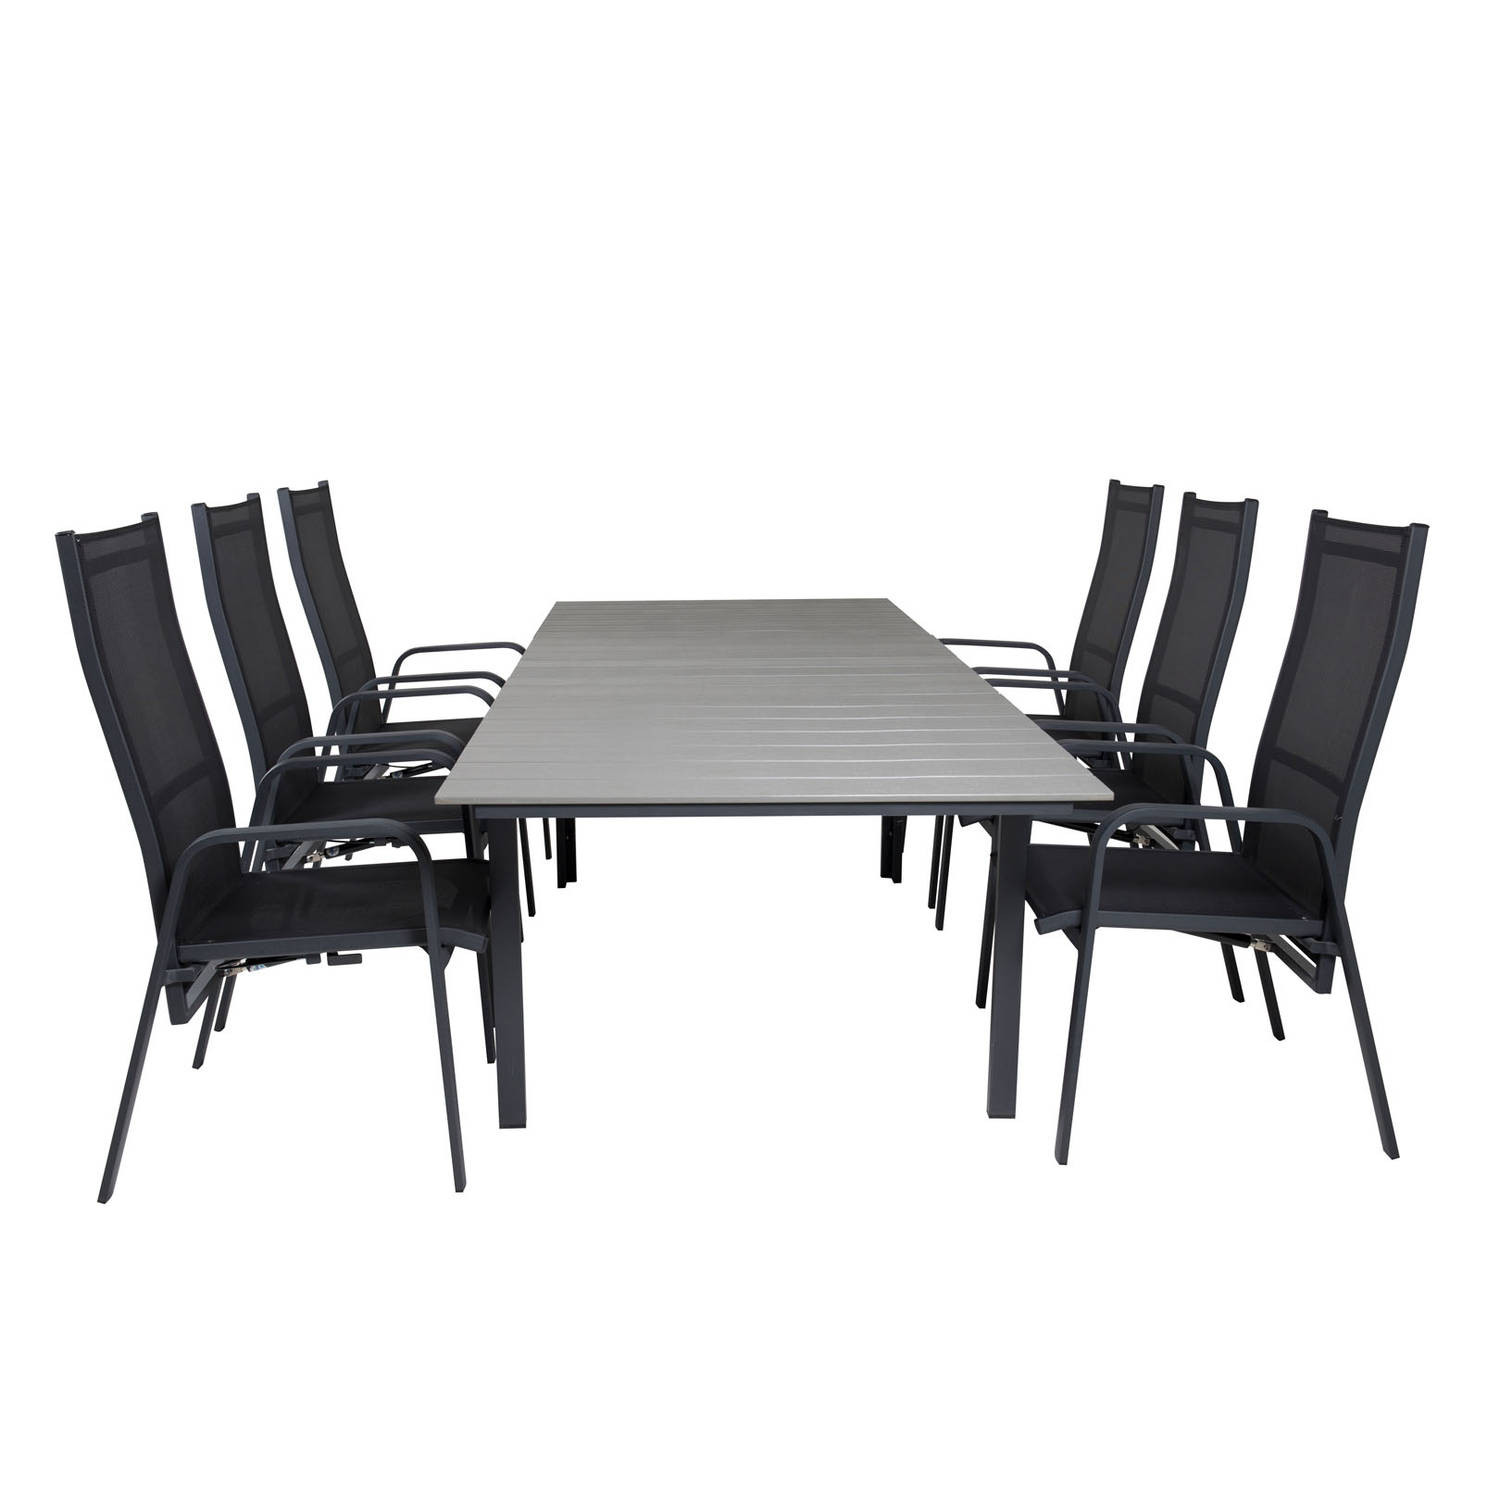 Levels tuinmeubelset tafel 100x160/240cm en 6 stoel Copacabana zwart, grijs.